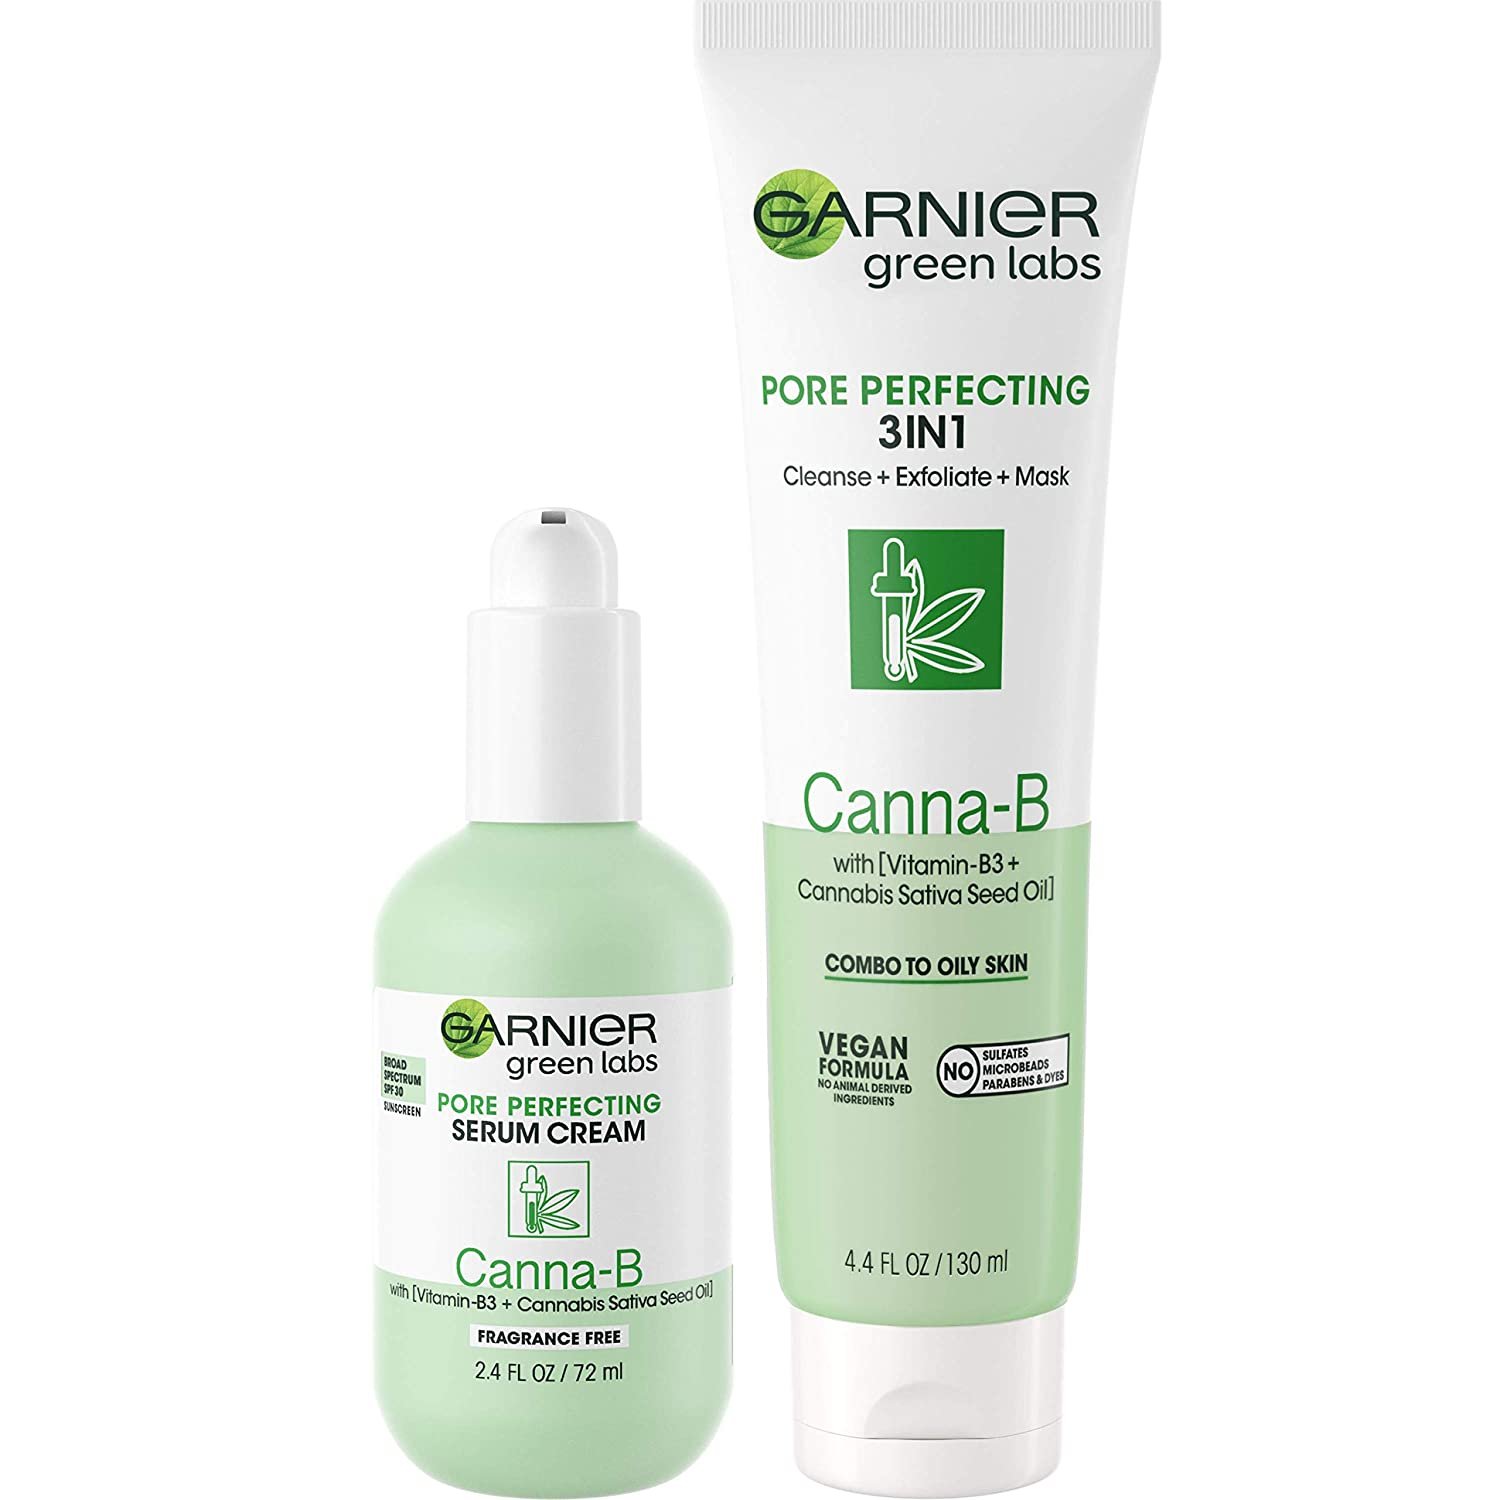 Garnier skinactive canna b pore perfect frag free 24 h moisture serum broad spectrum spf 30 sunscreen serum cream 3 in 1 face wash bundle canna b.jpg